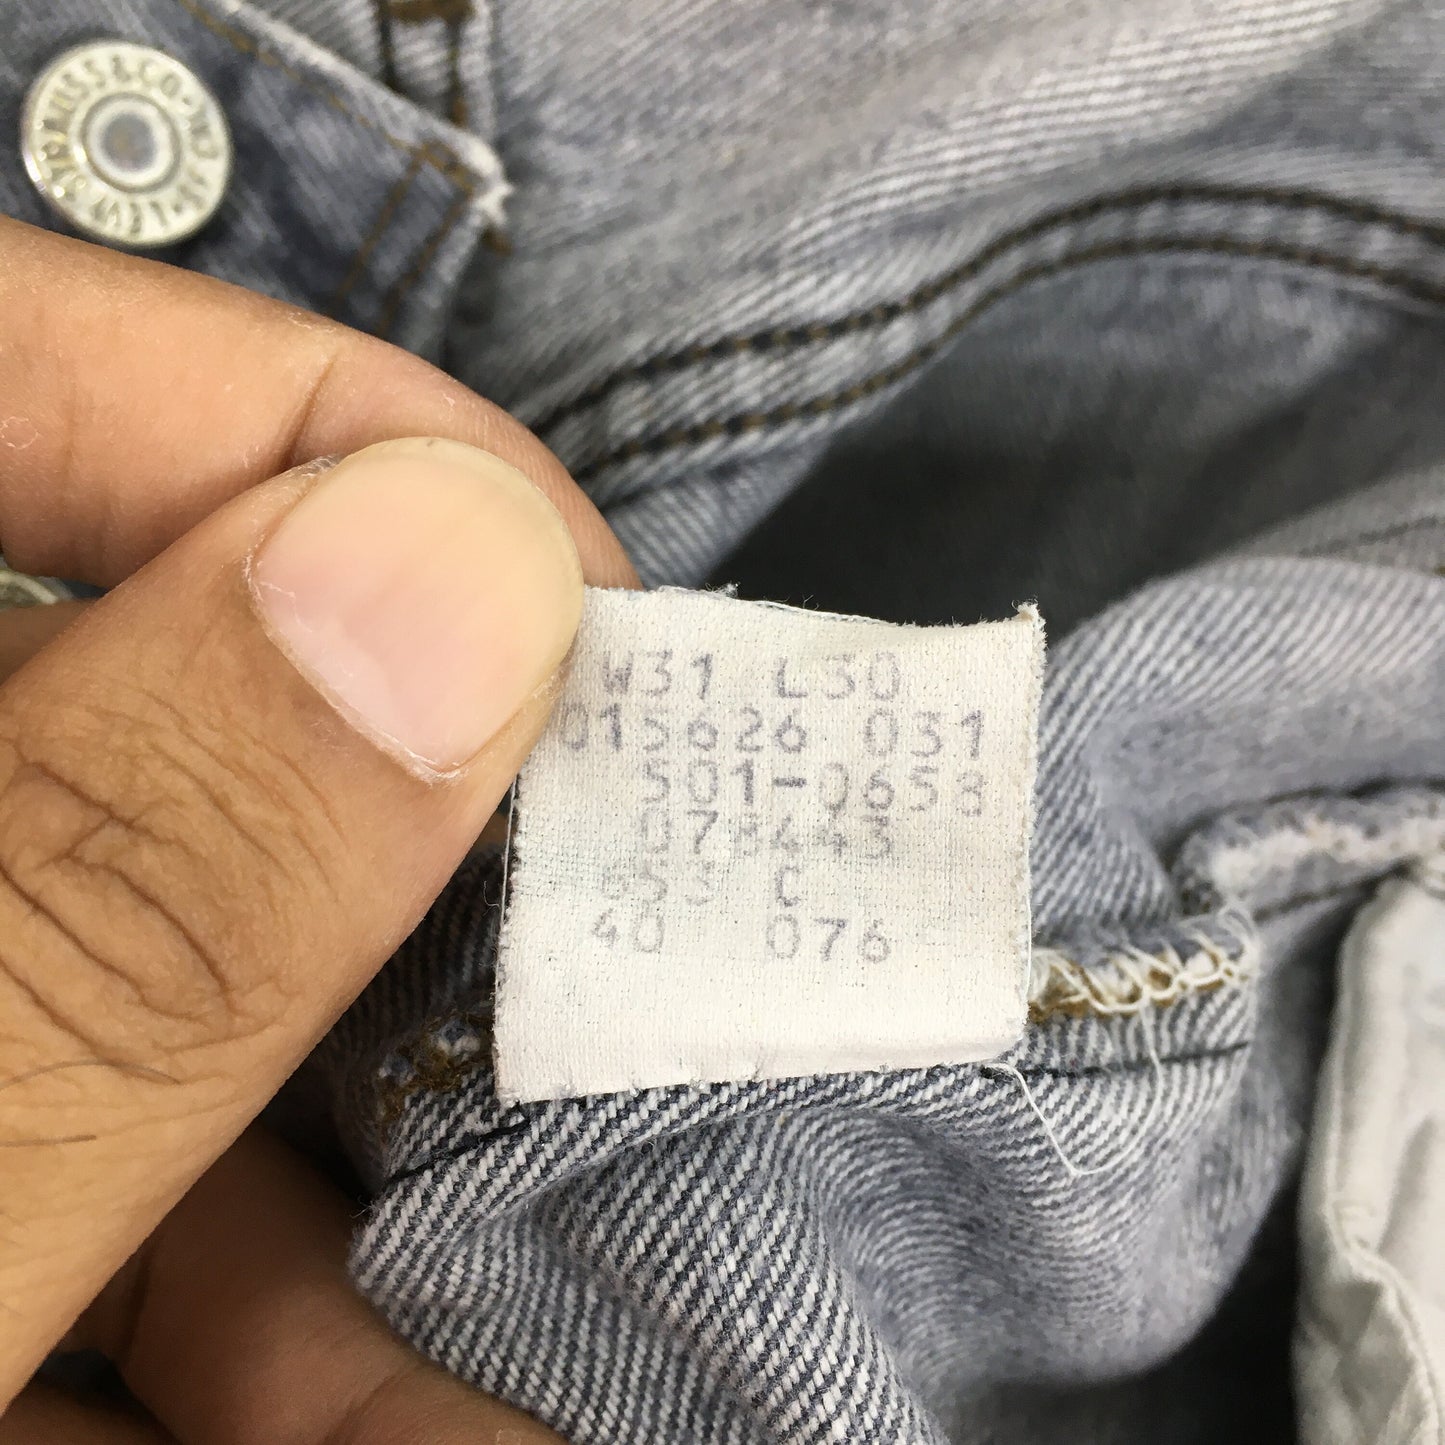 Levi's 501 Ash Gray Distressed Jeans Size 29x29.5